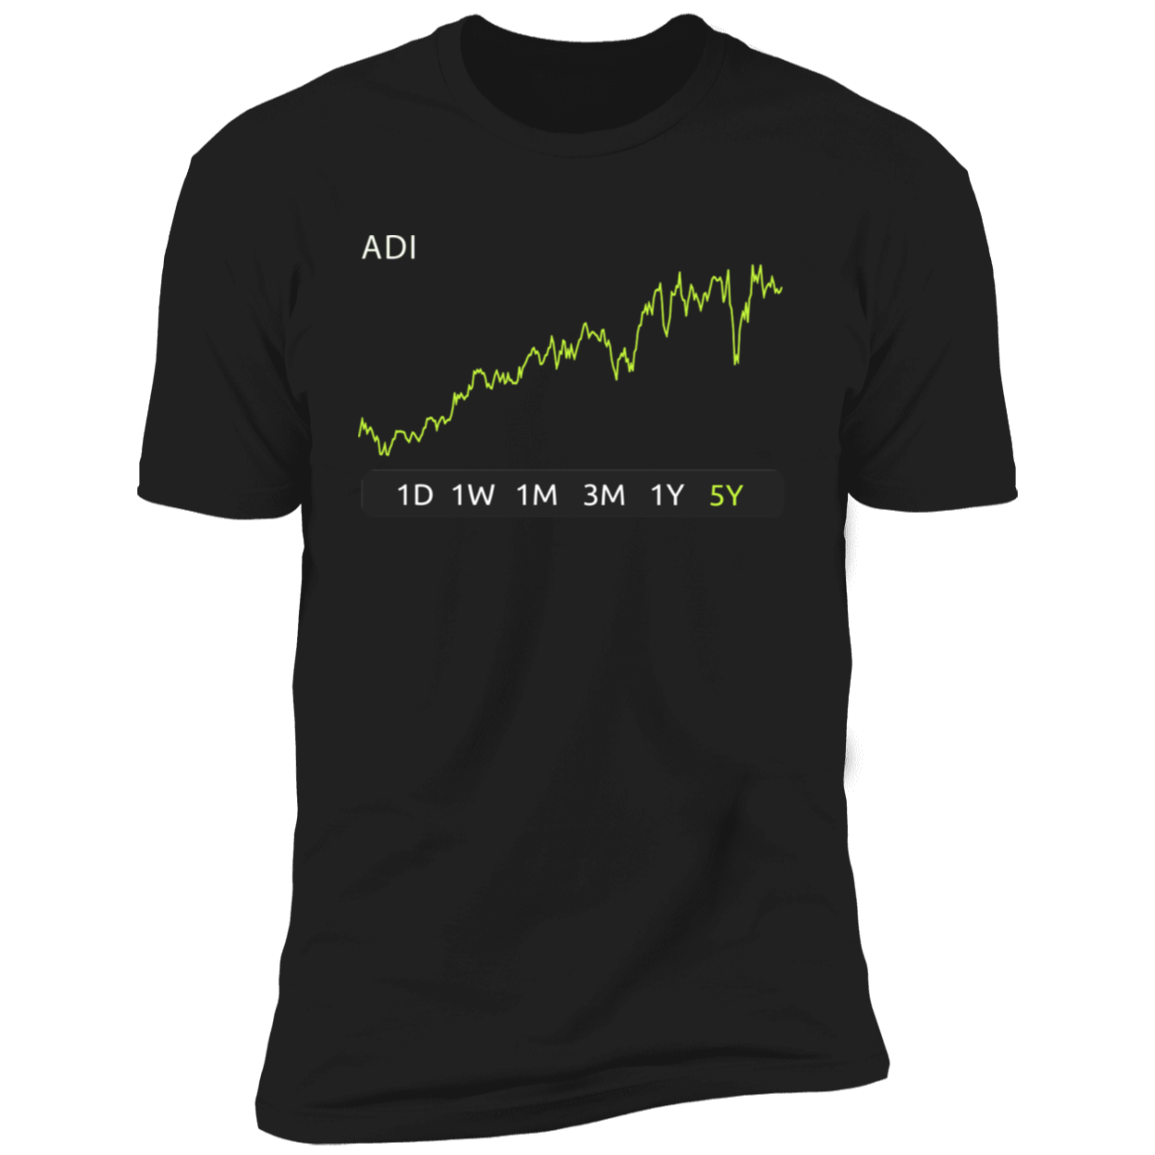 ADI Stock 5y Premium T-Shirt